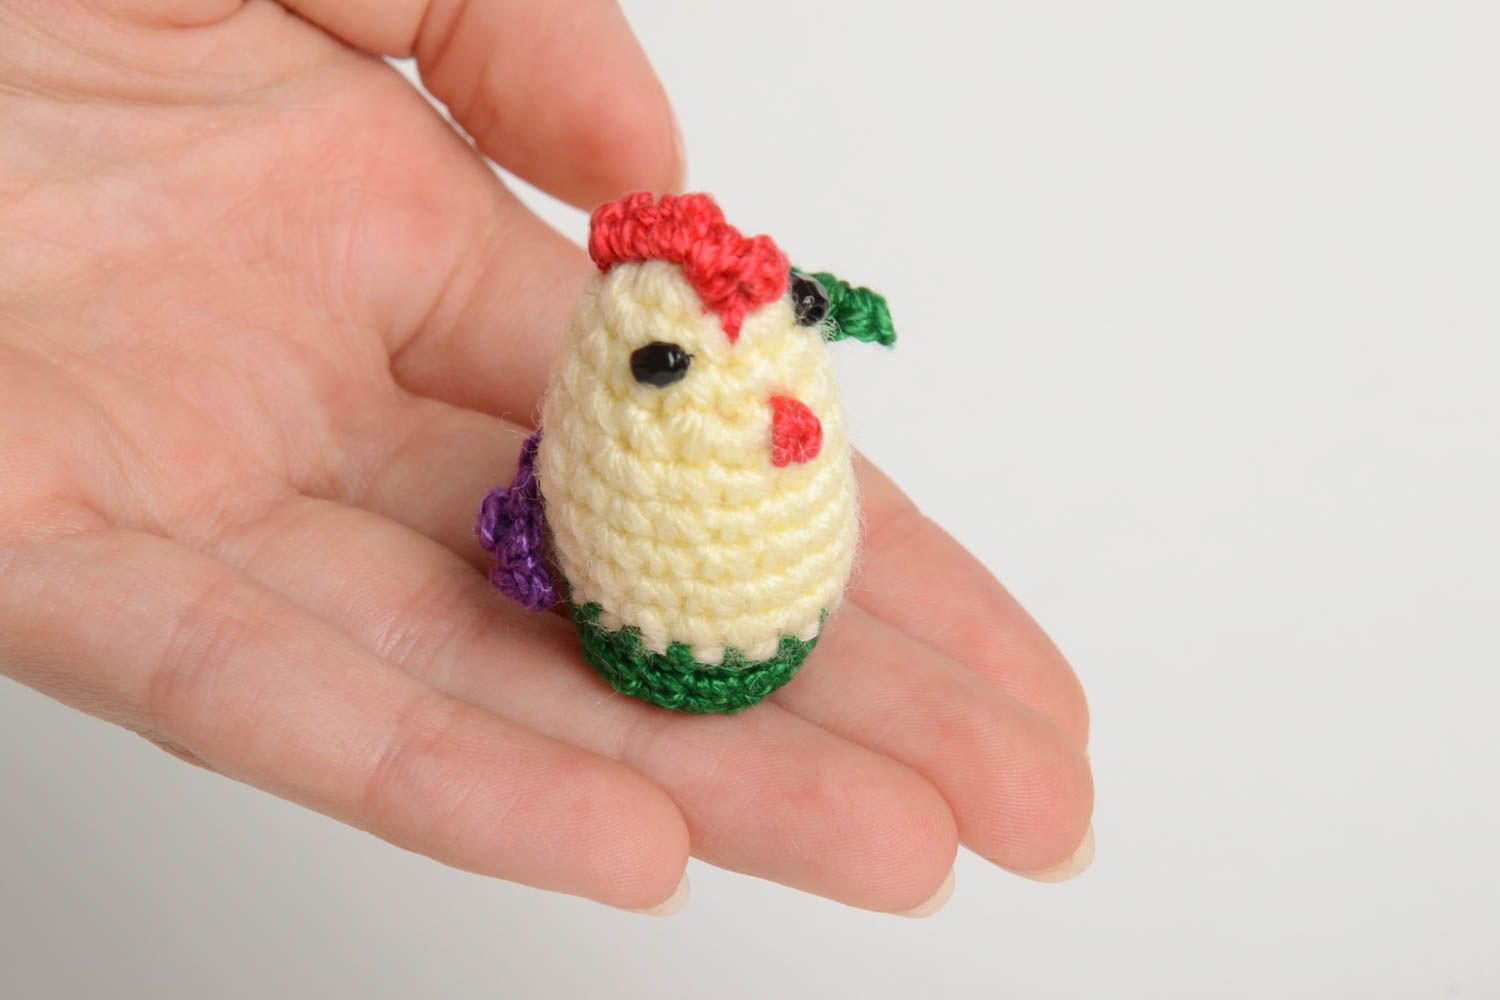 Handmade toy designer toy animal toy gift for baby nursery decor crocheted toy photo 5